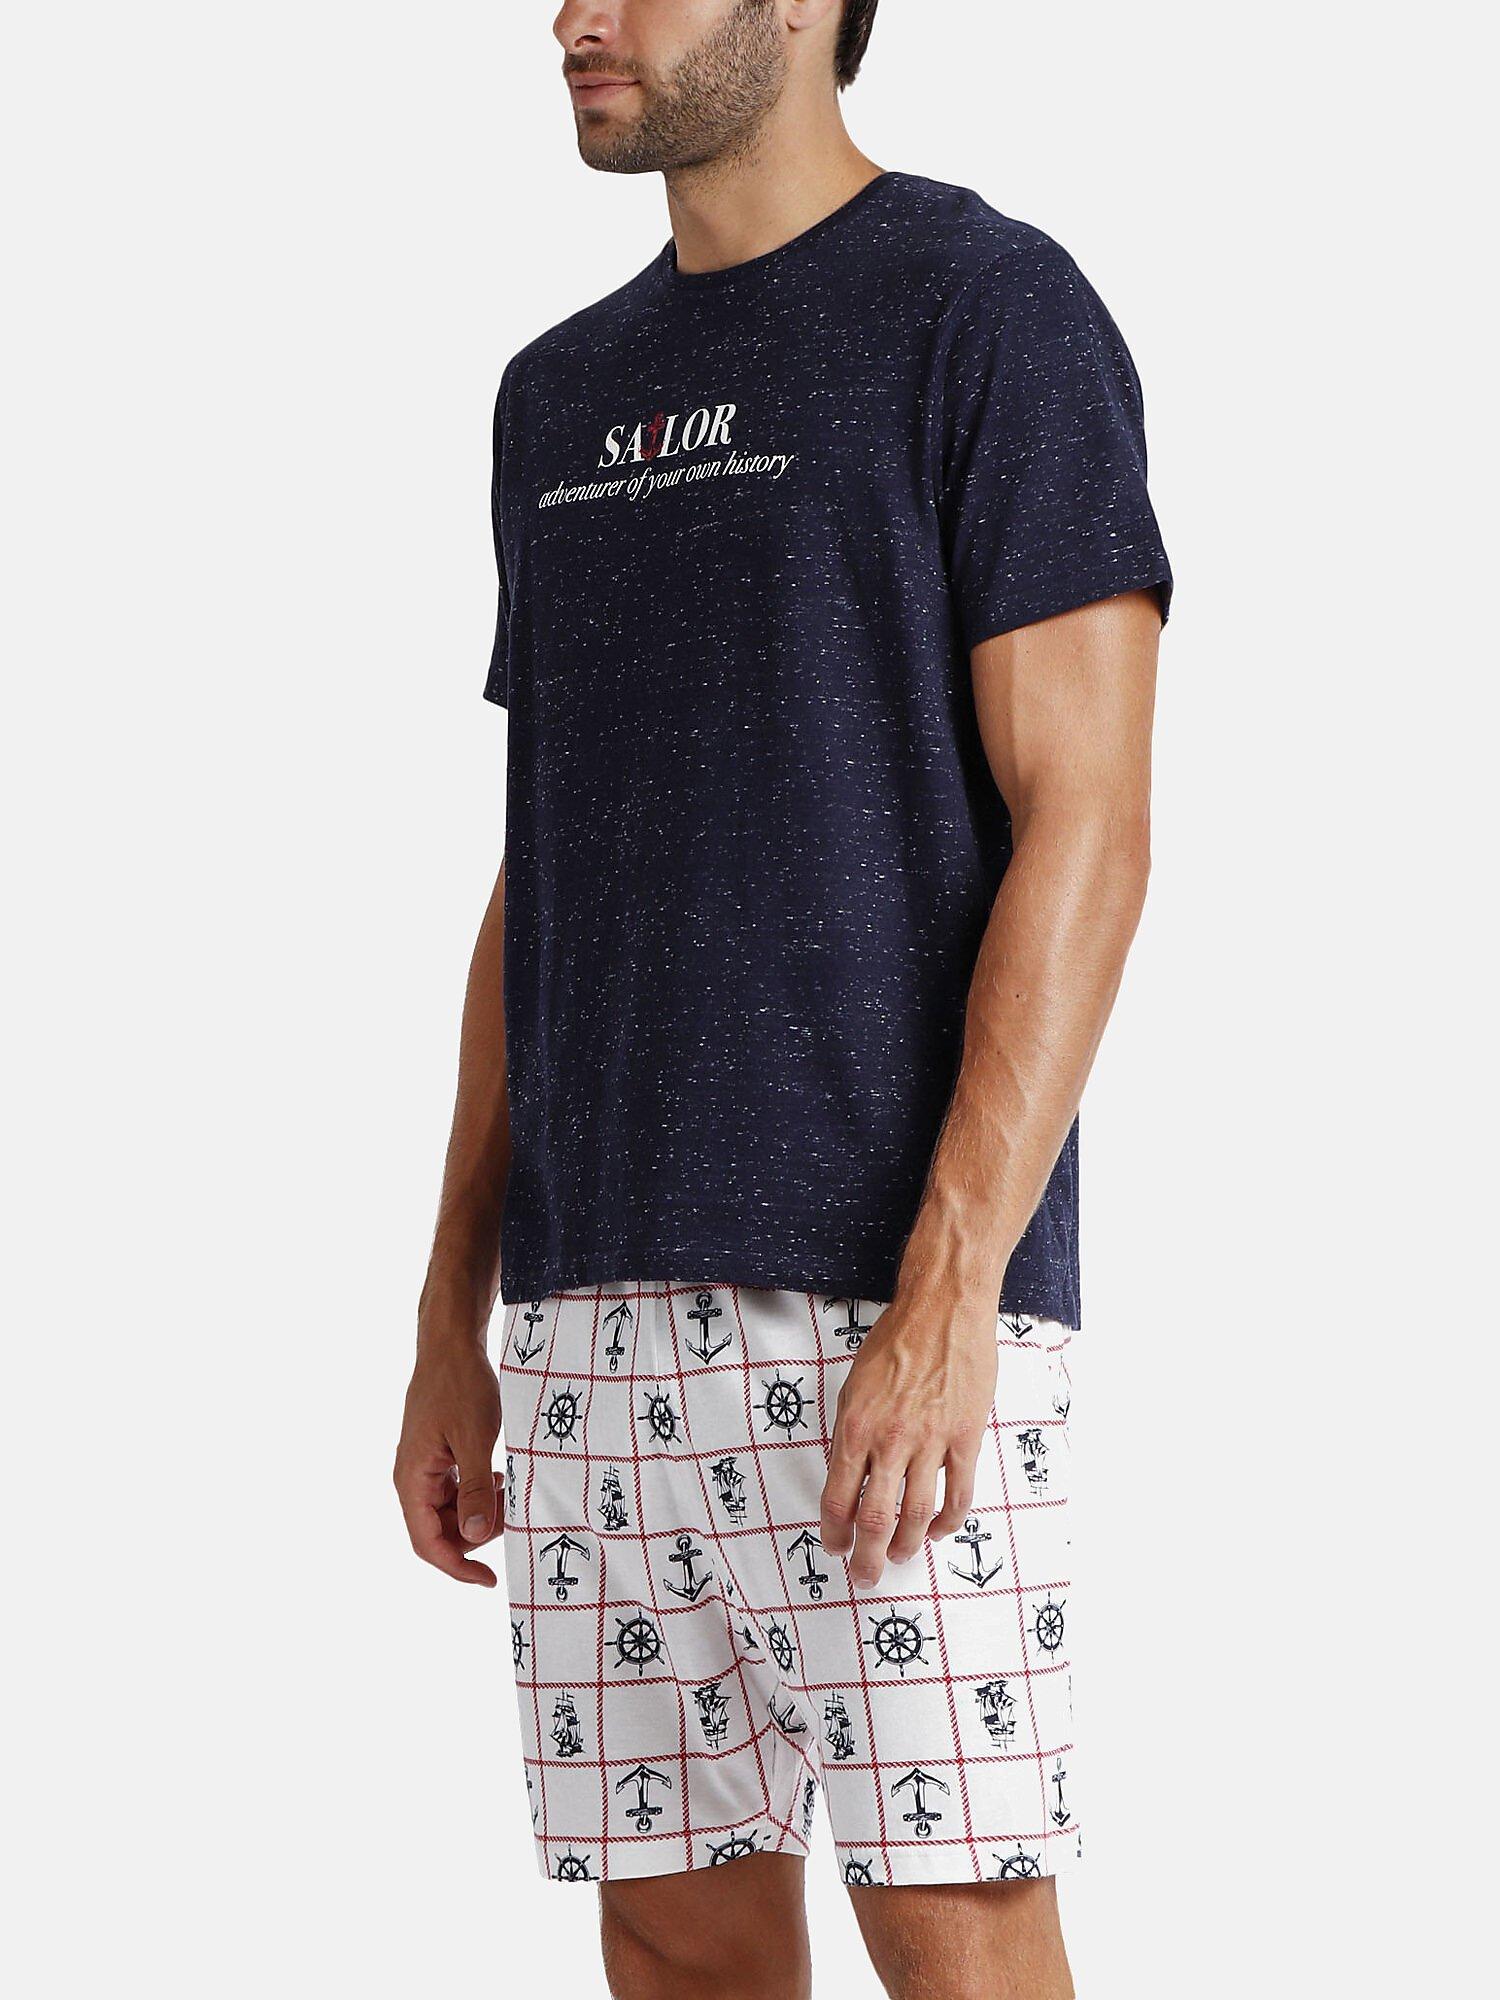 Admas  Pyjama short t-shirt Sailor 